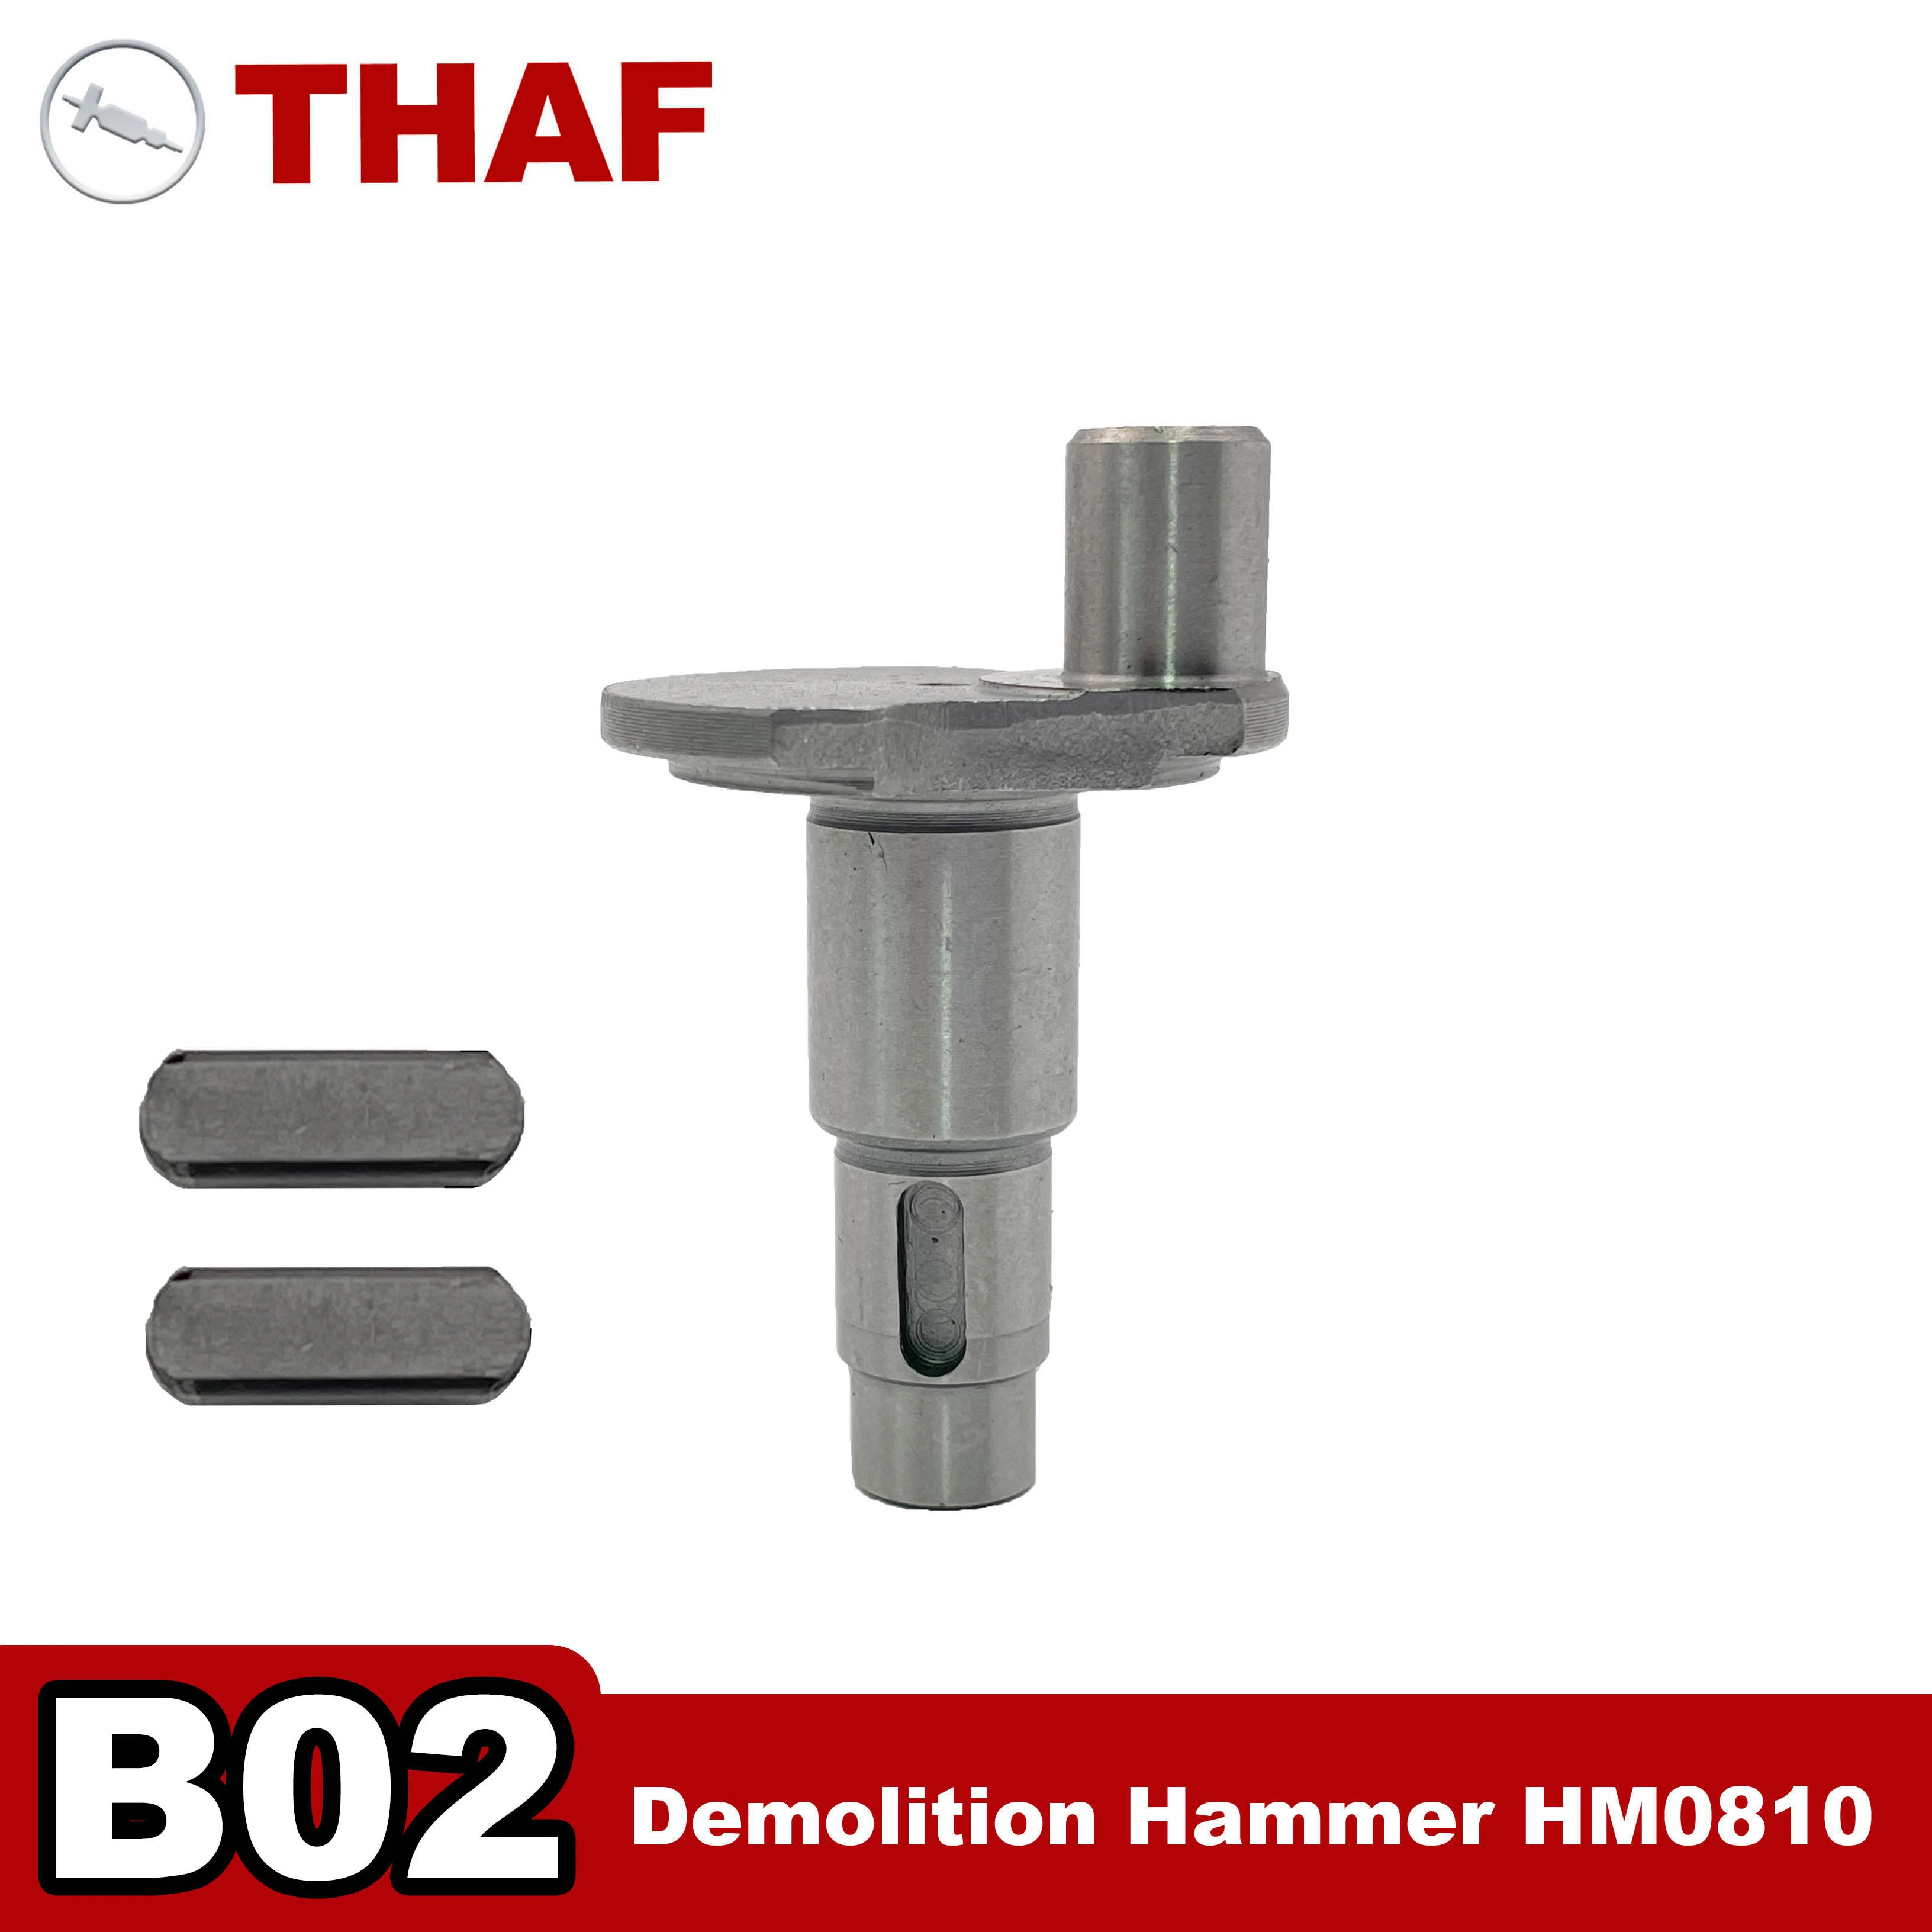 Crankshaft Replacement Spare Parts For Makita Demolition Hammer HM0810  B02|Power Tool Accessories| - AliExpress